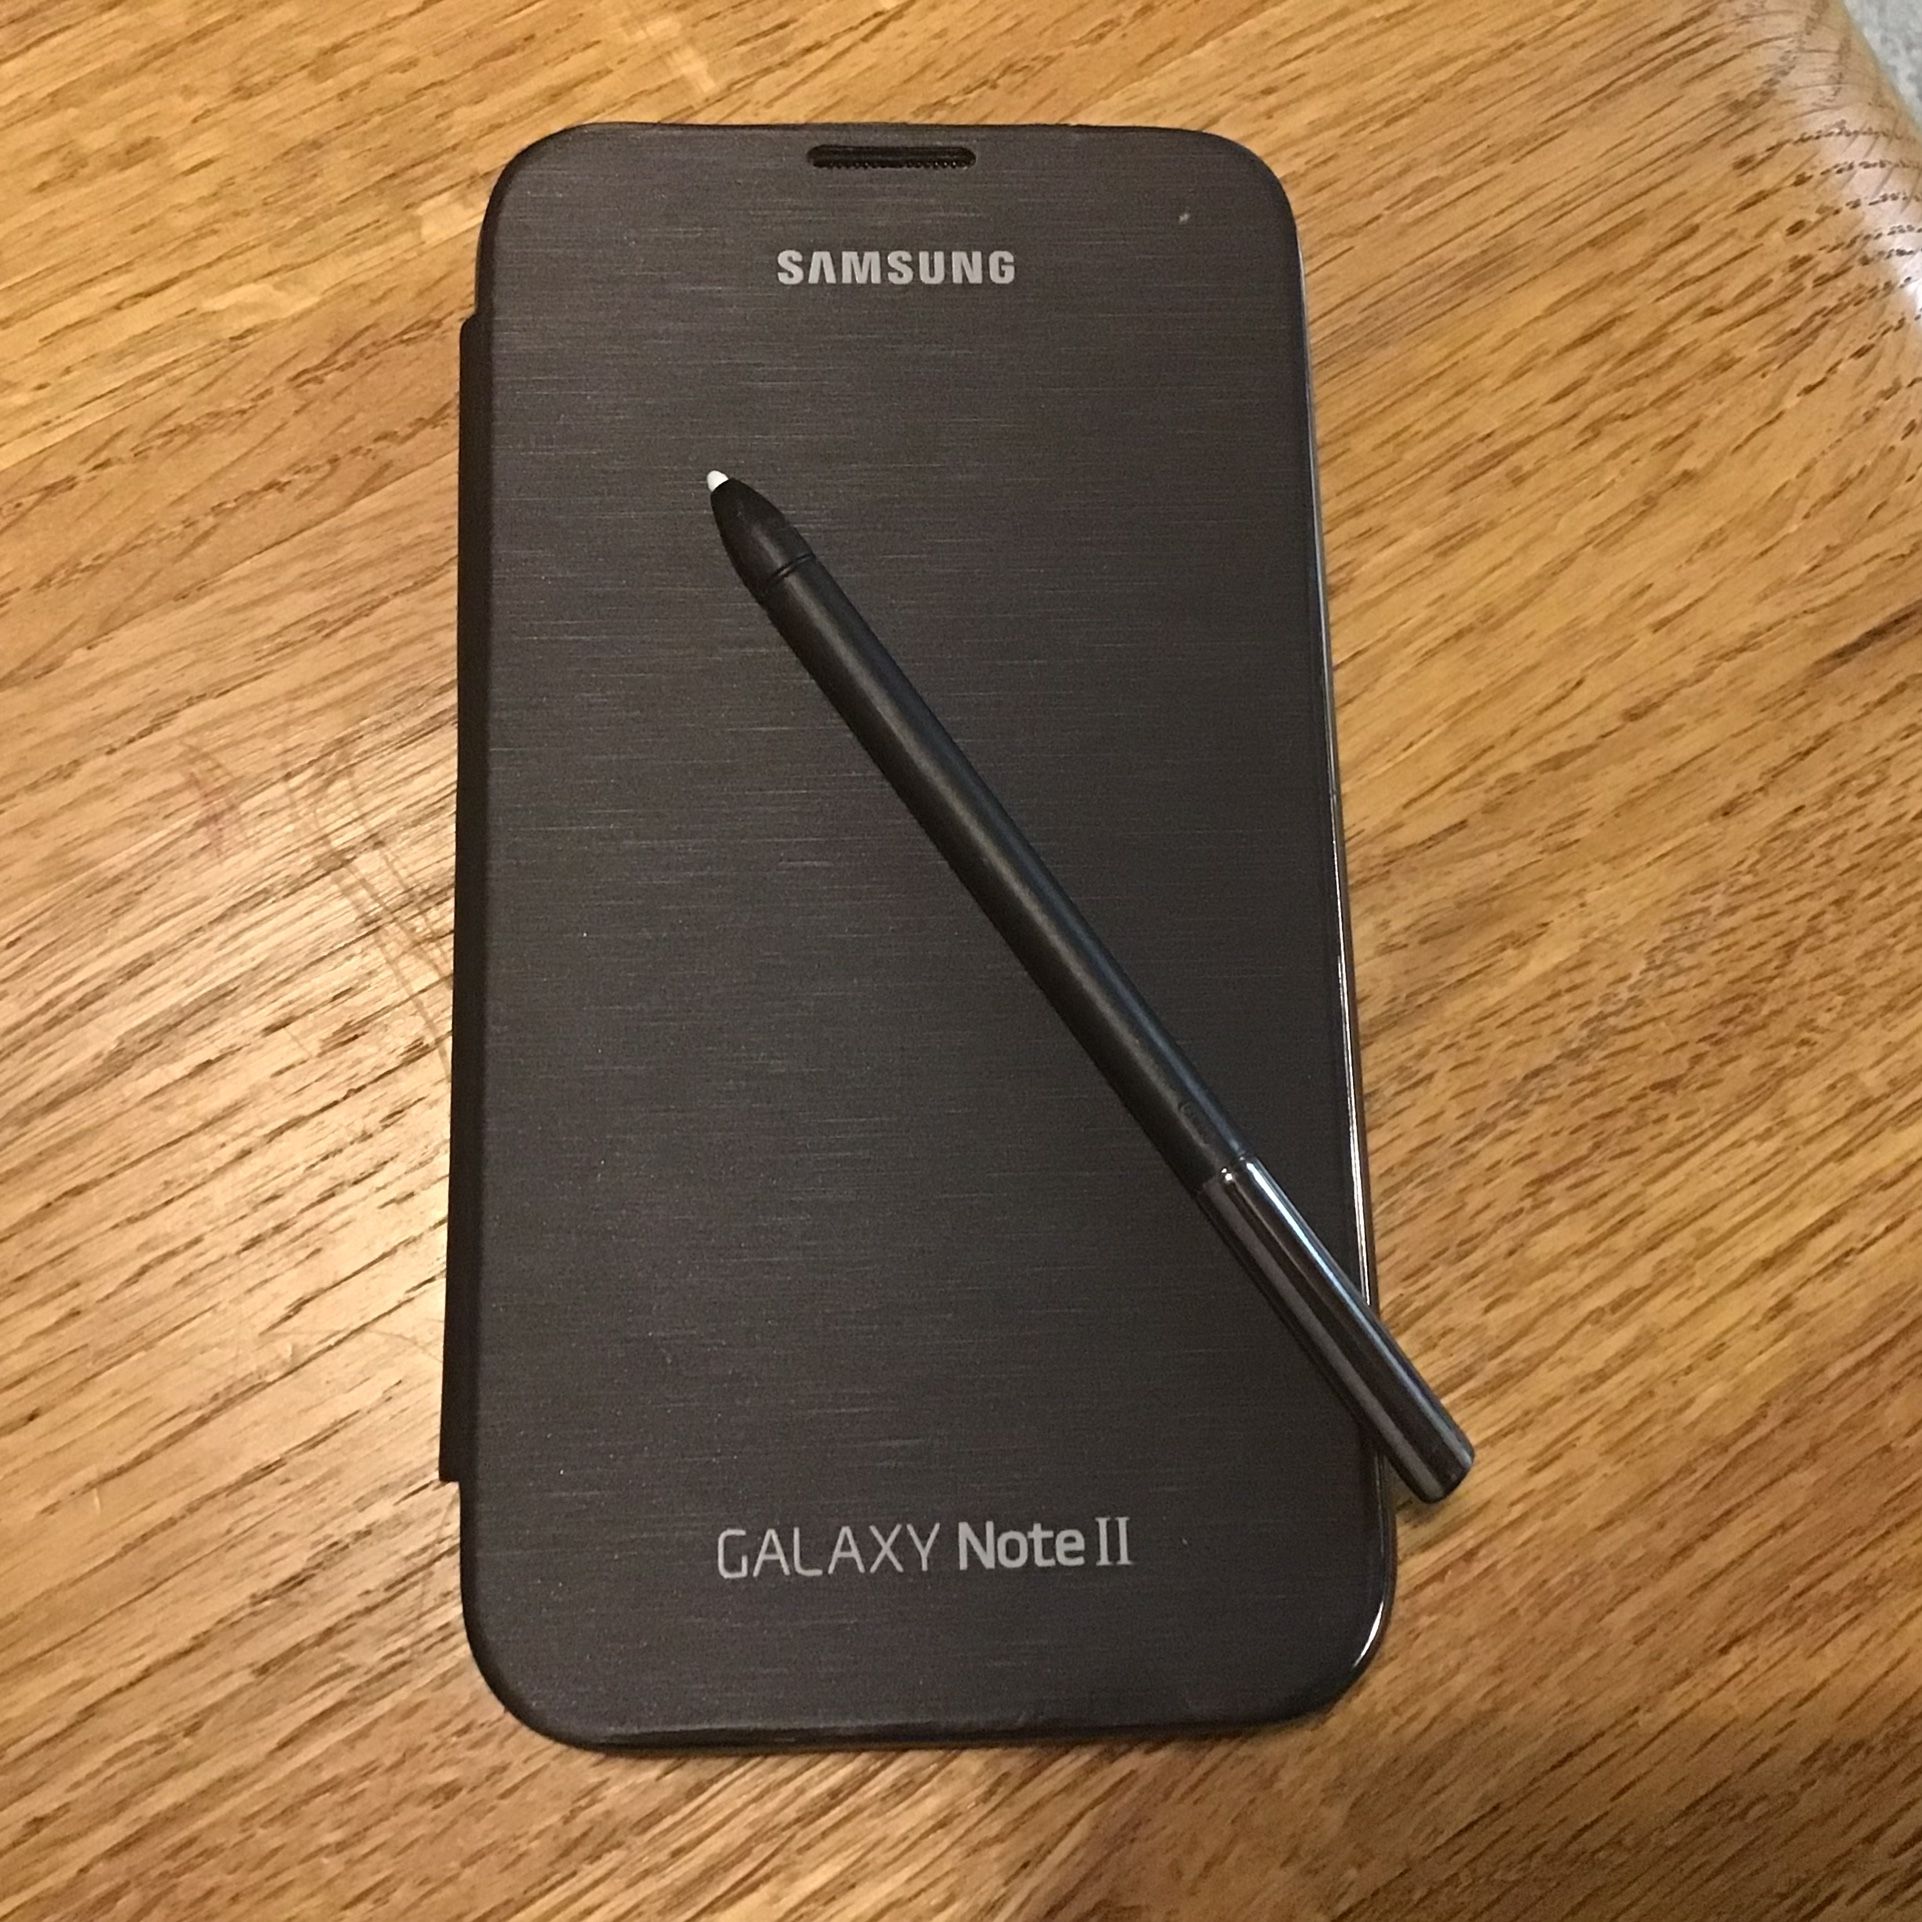 Samsung Galaxy Note 2 - Unlocked